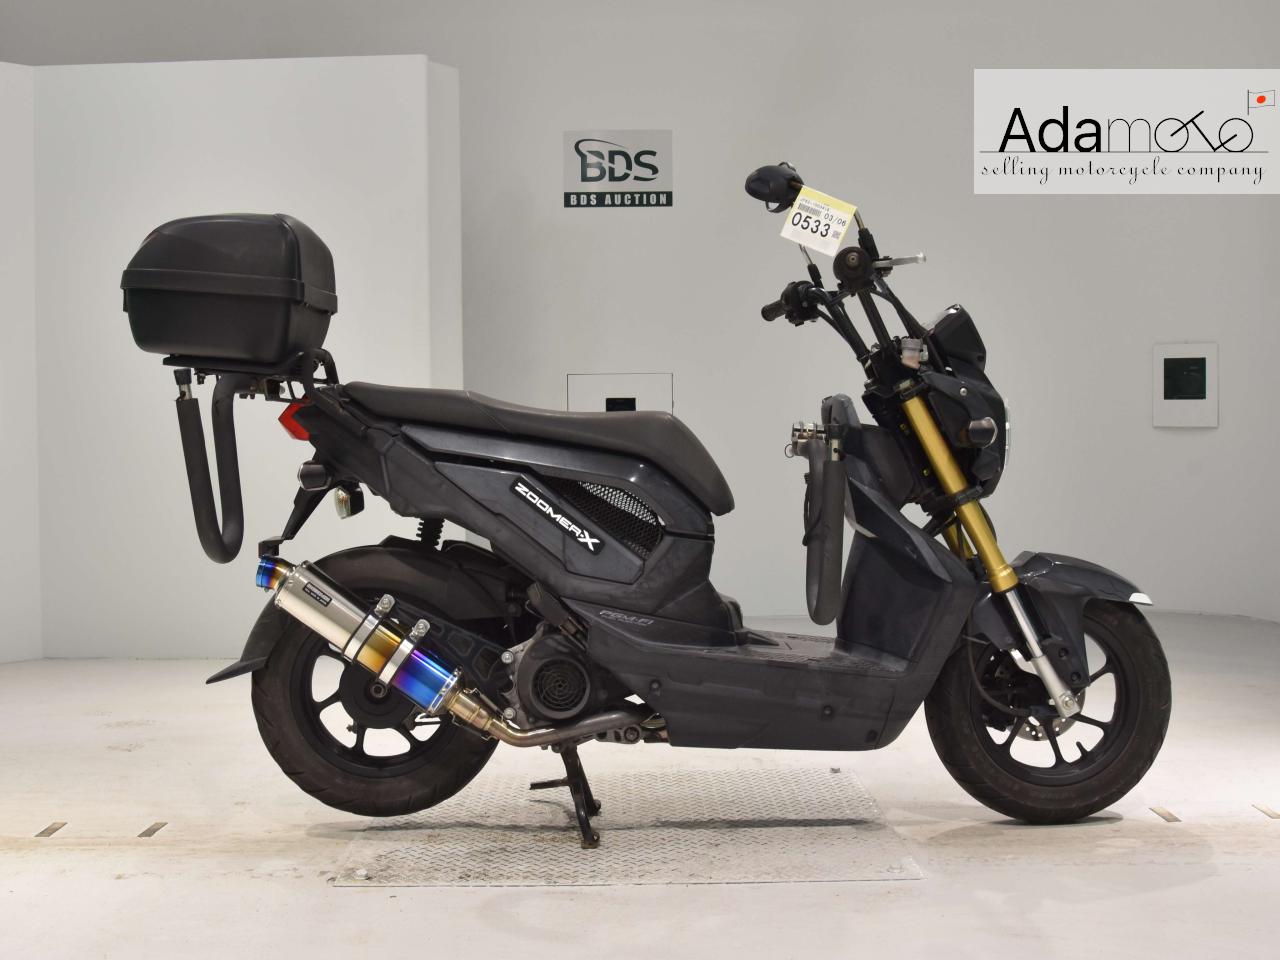 Honda ZOOMER X - Adamoto - Motorcycles from Japan